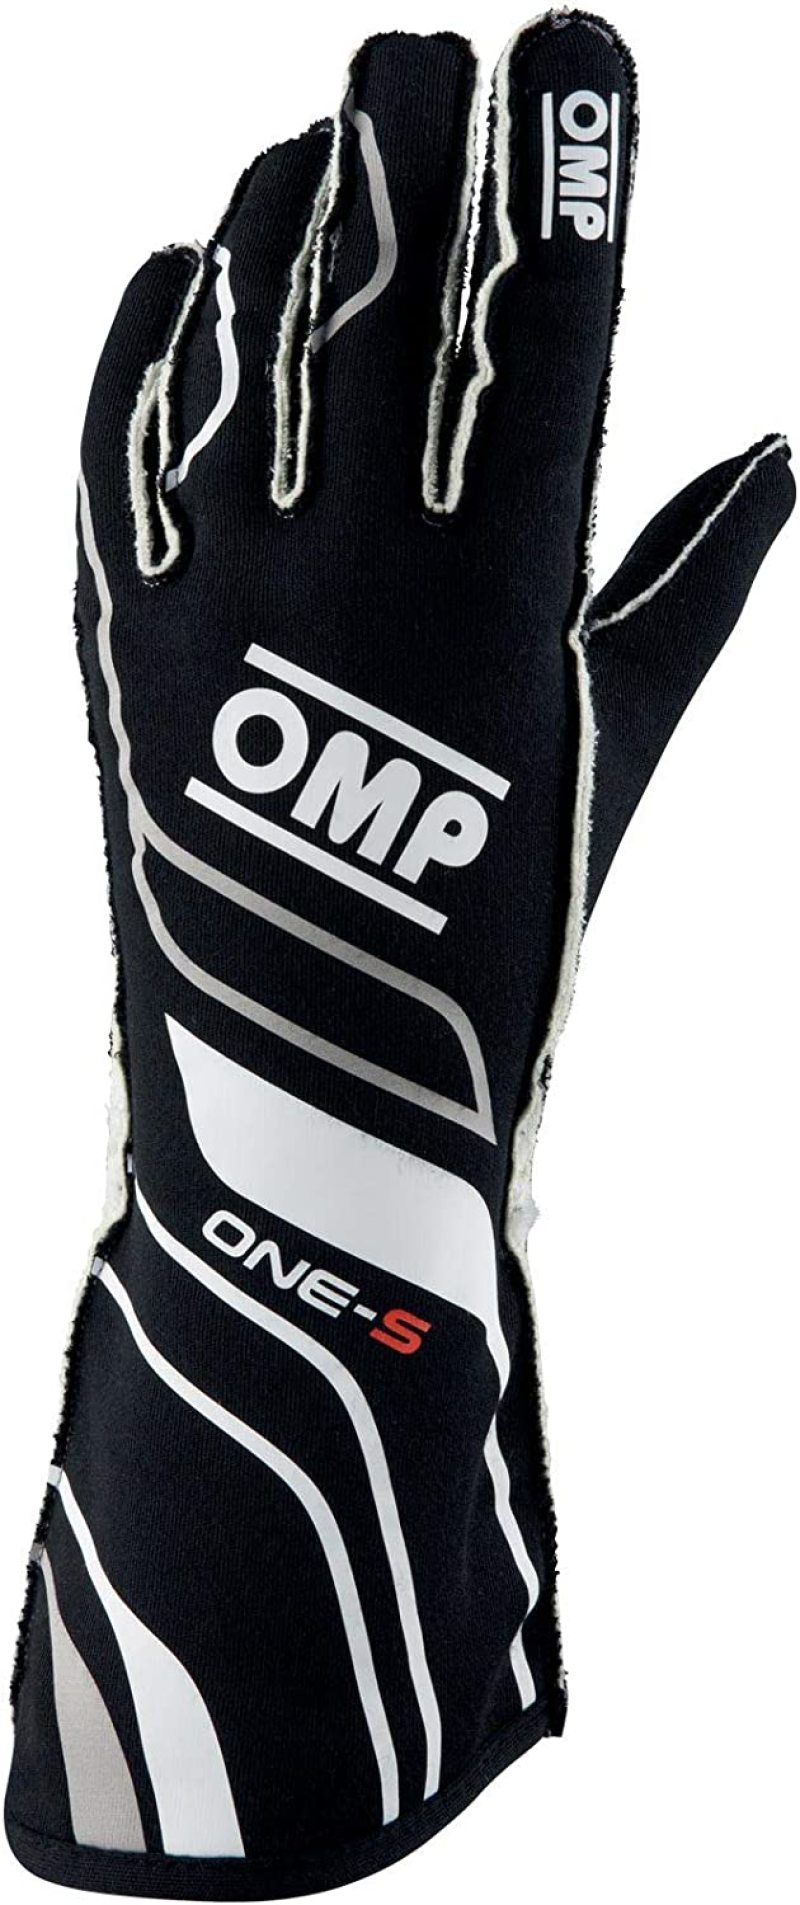 OMP One-S Gloves Black - Size Xs Fia 8556-2018 - IB0-0770-A01-071-XS